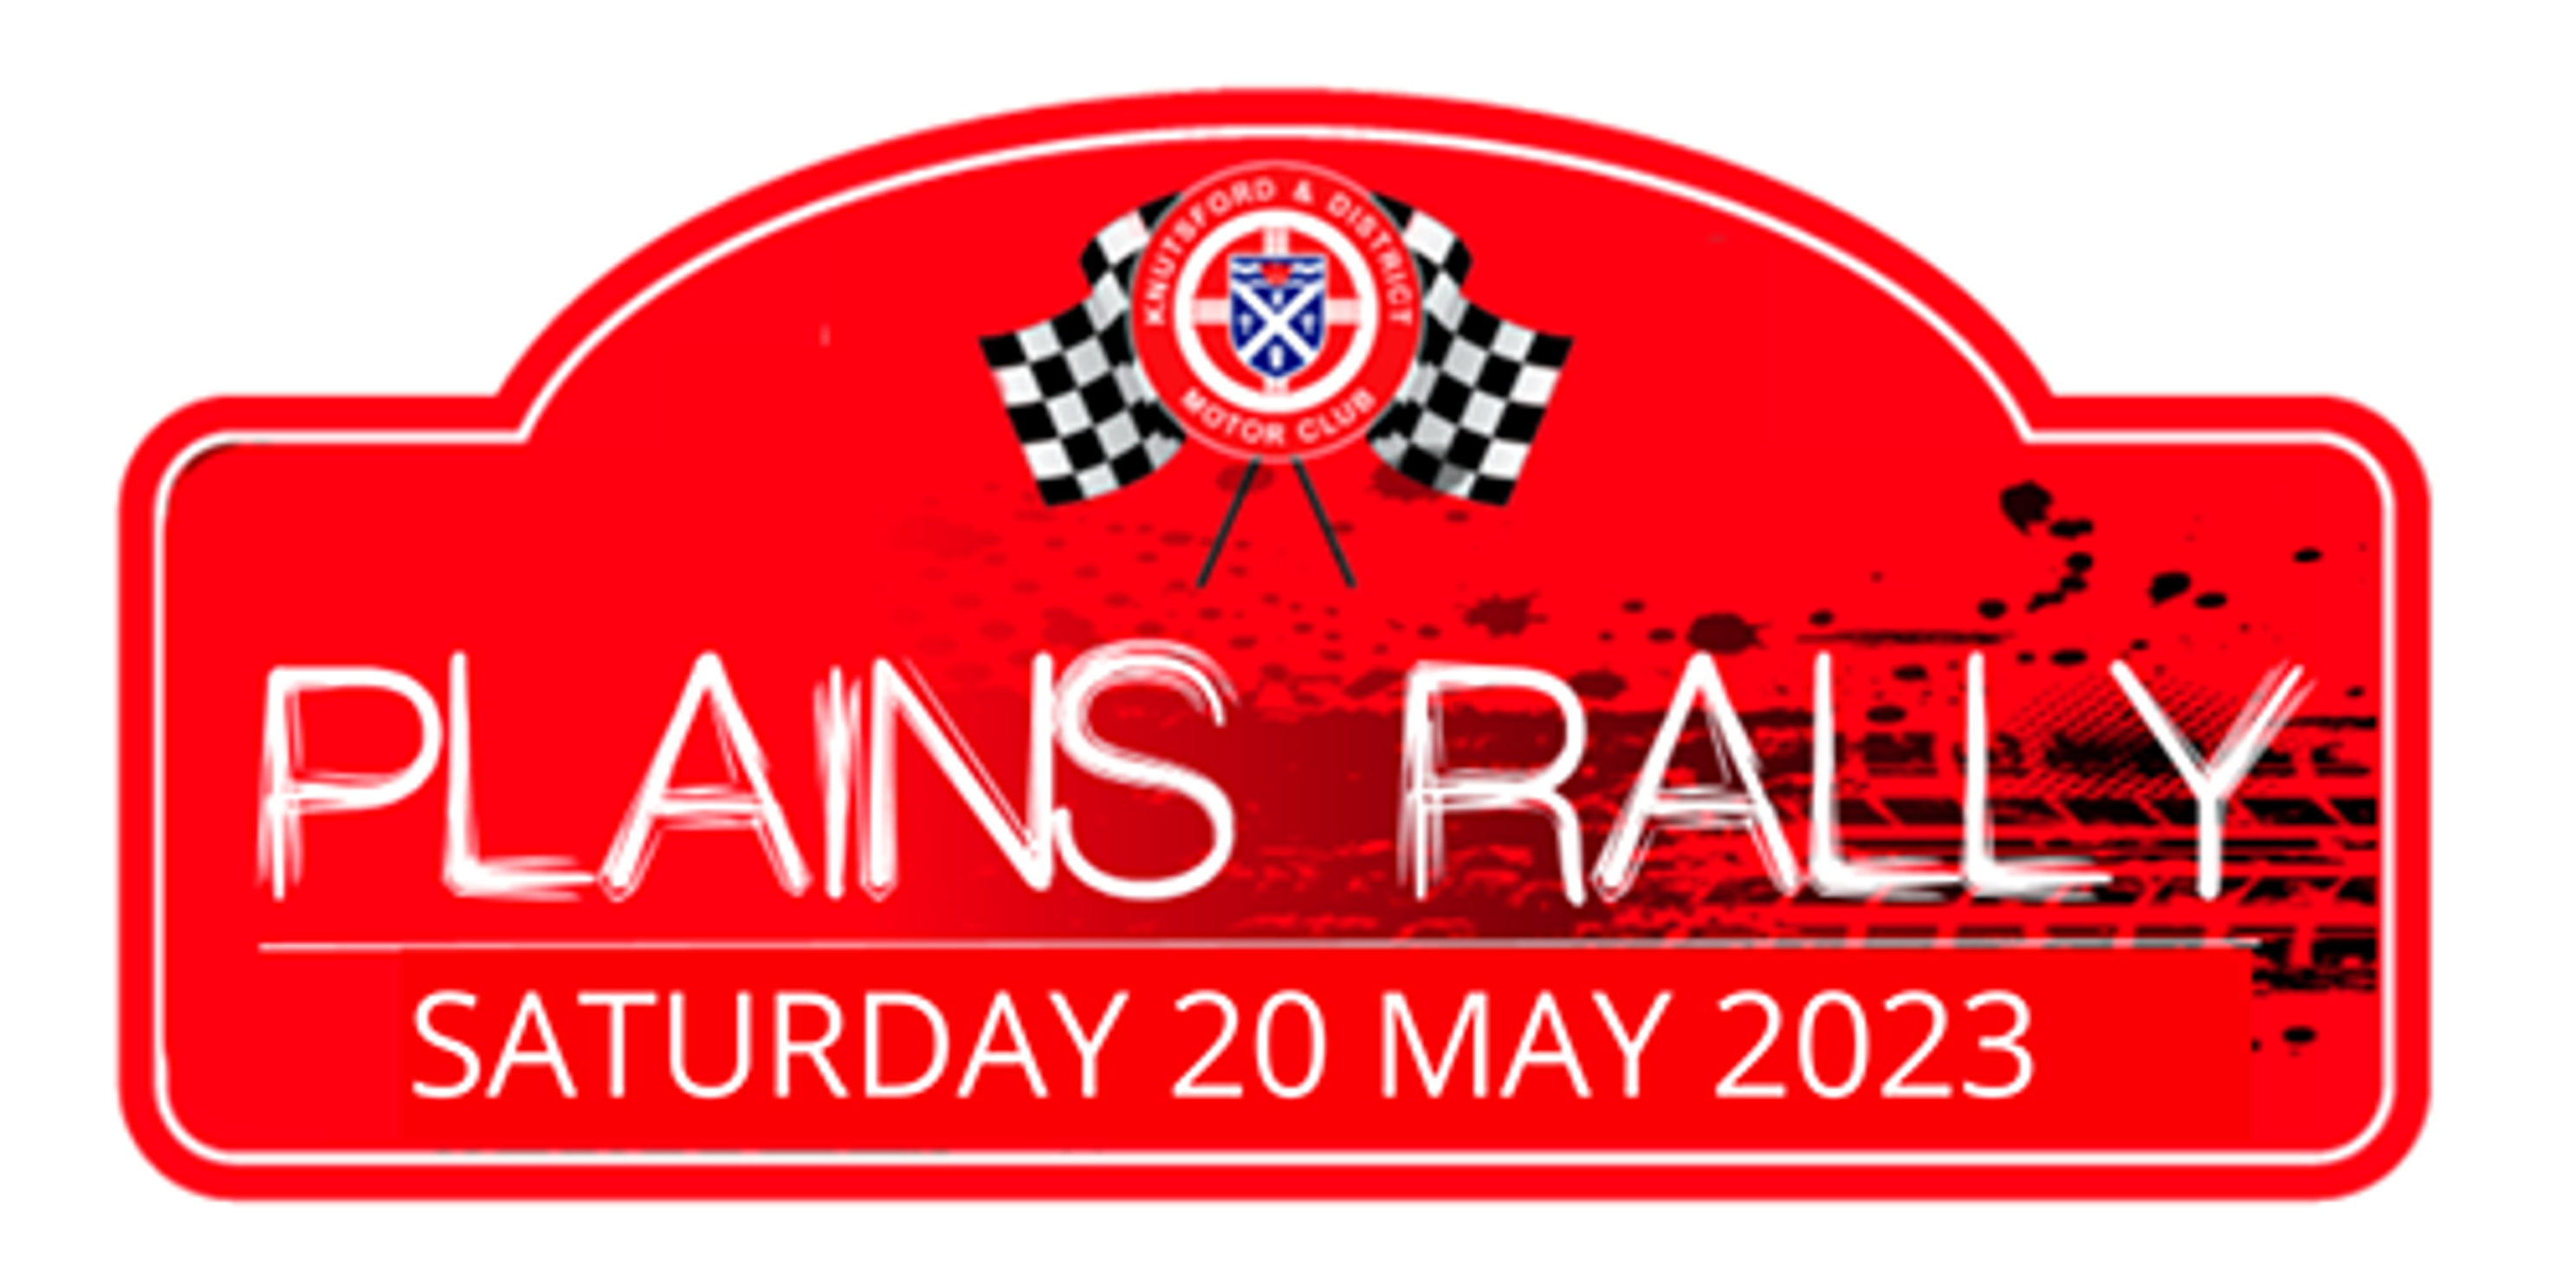 plains rally logo 2023.png 4